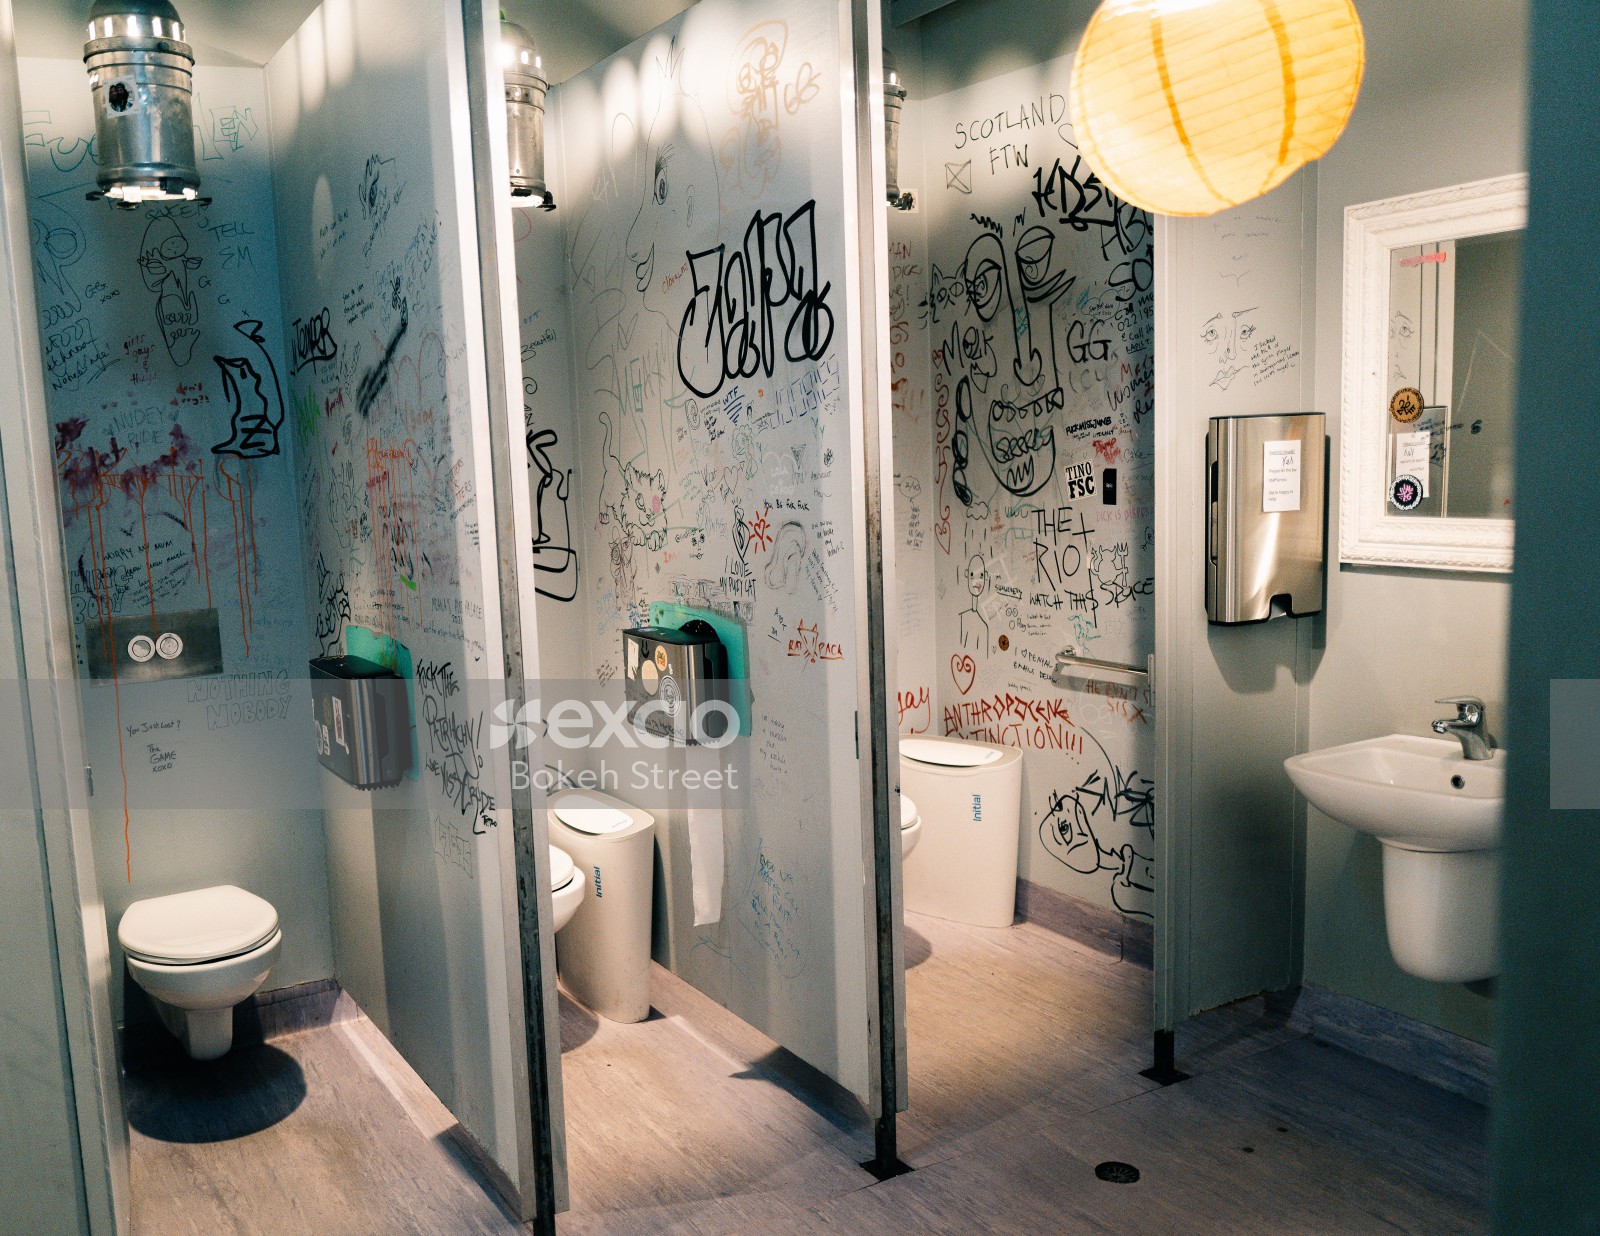 Bathroom stalls decorated with graffiti China paper lantern